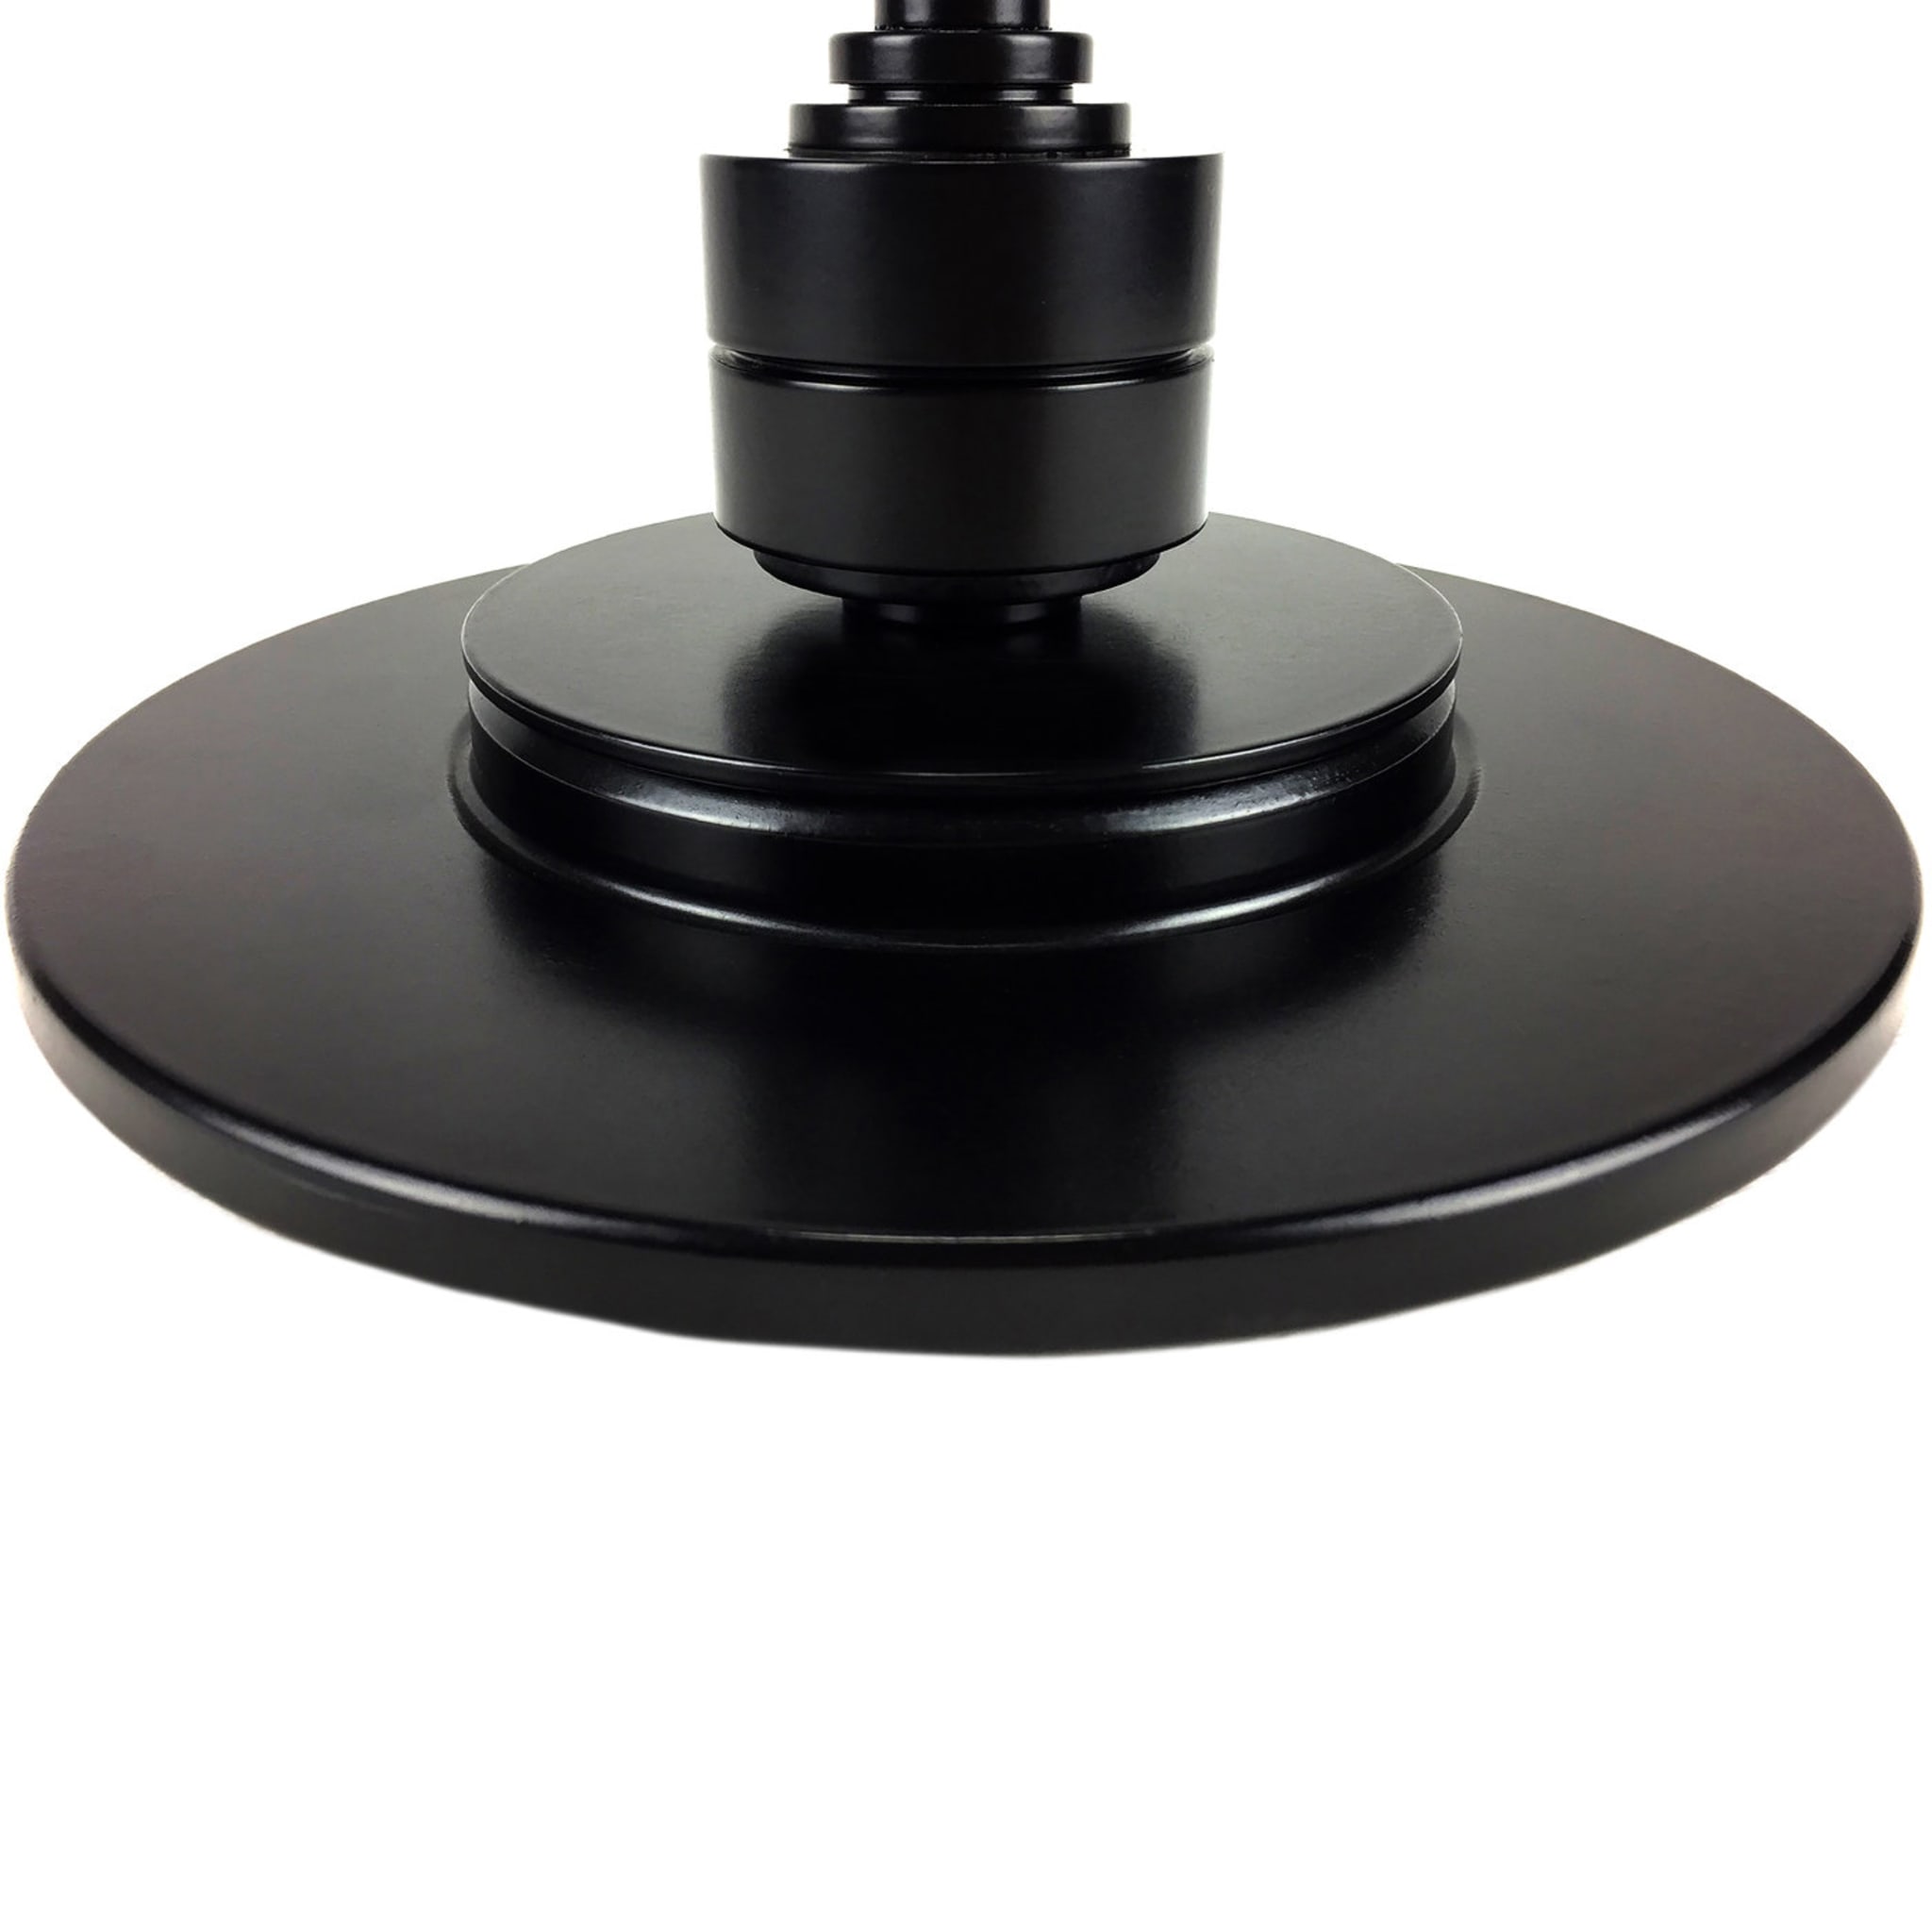 Semele Black Leather Floor Lamp #1 - Alternative view 3